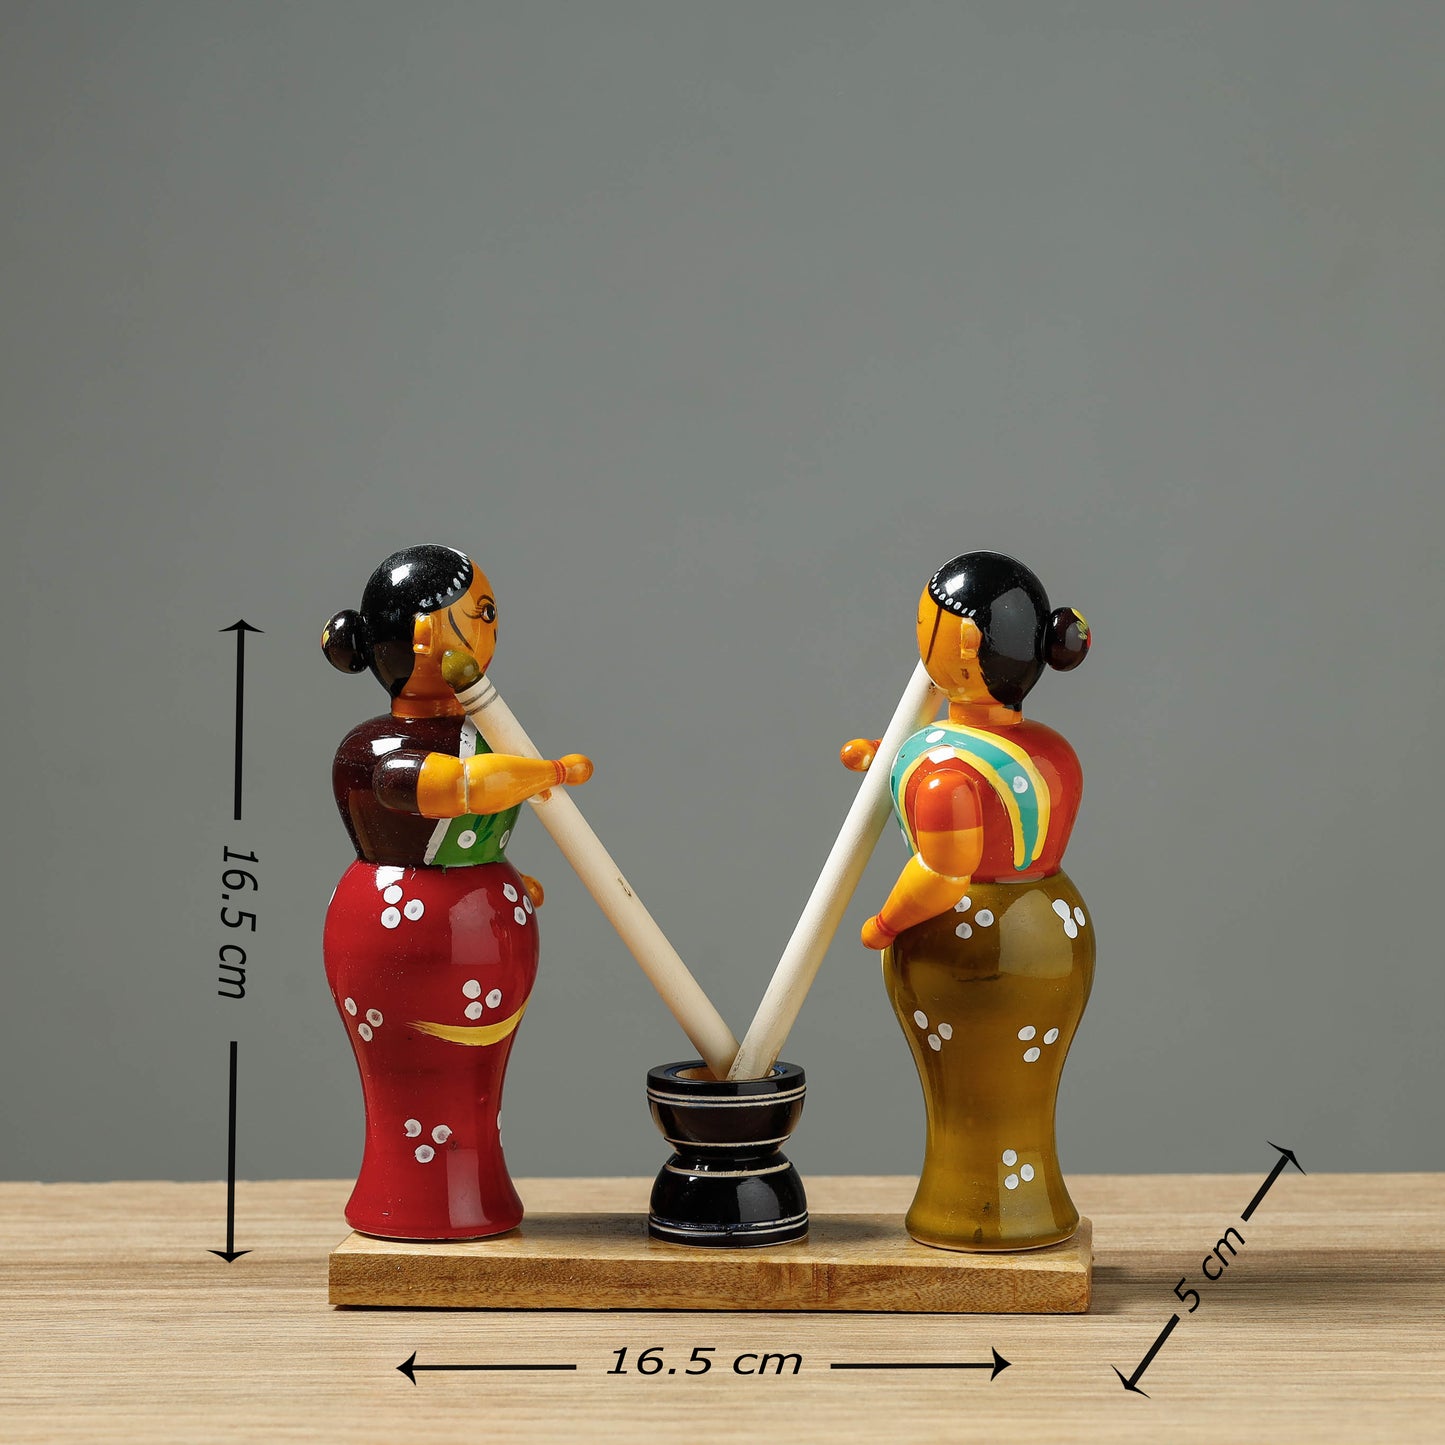 Roll Rakle - Etikoppaka Handcrafted Wooden Toy